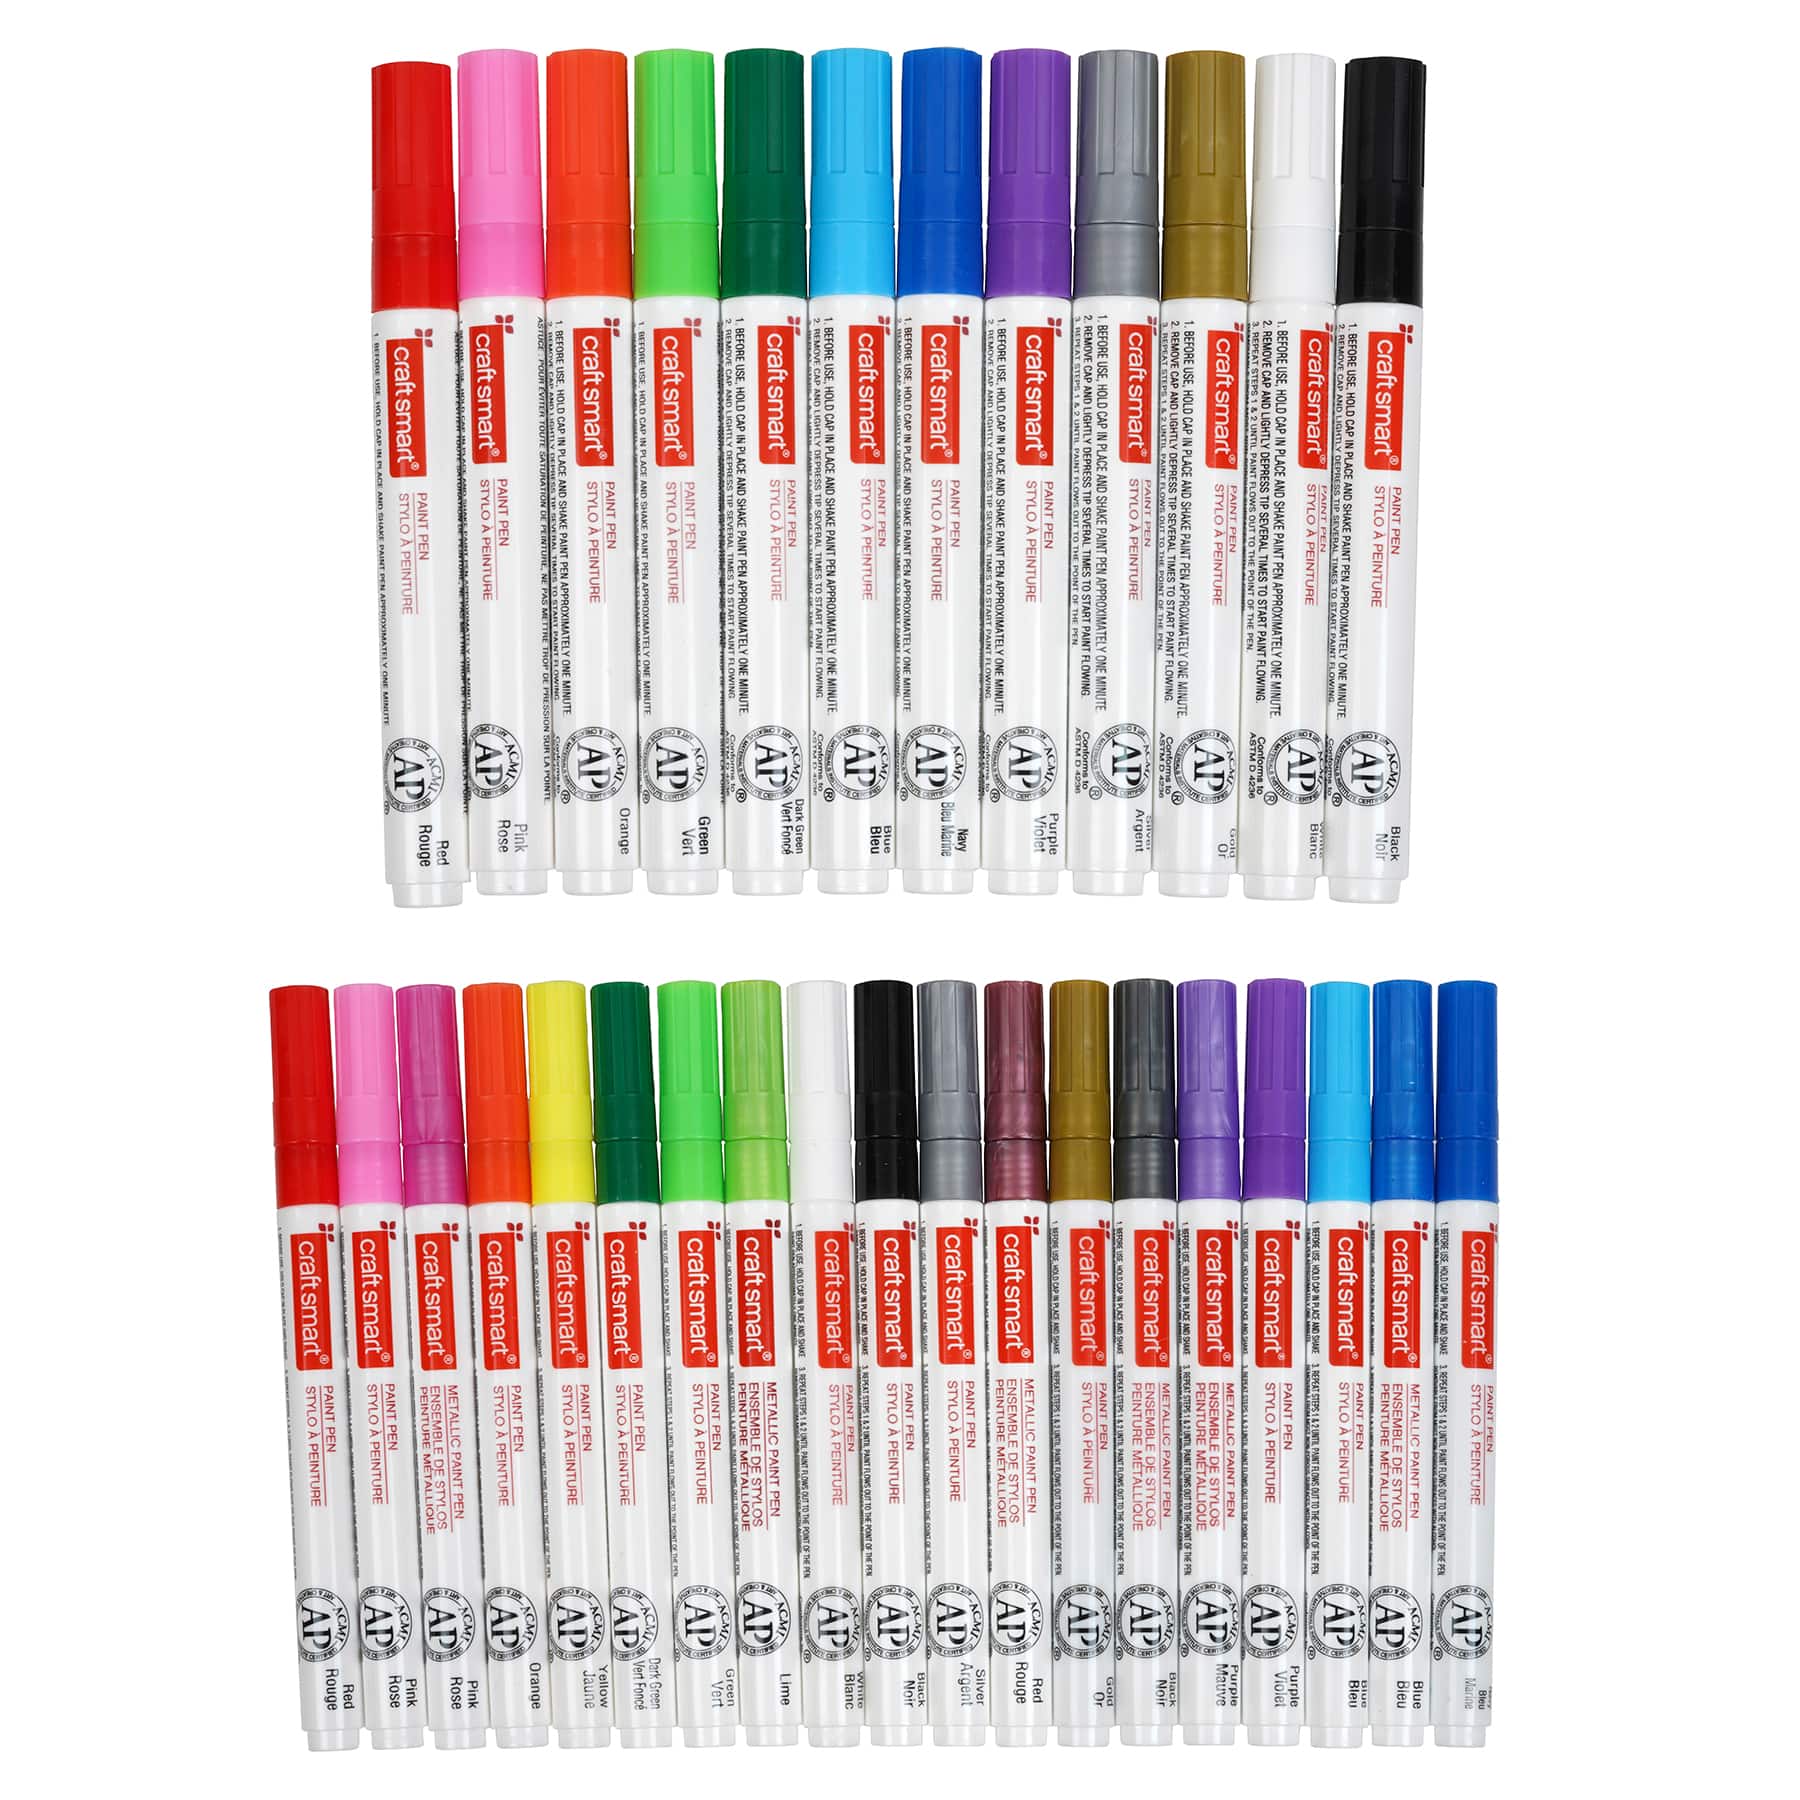 6 Packs: 48 ct. (288 total) Medium & Broad Oil Paint Pens by Craft Smart®